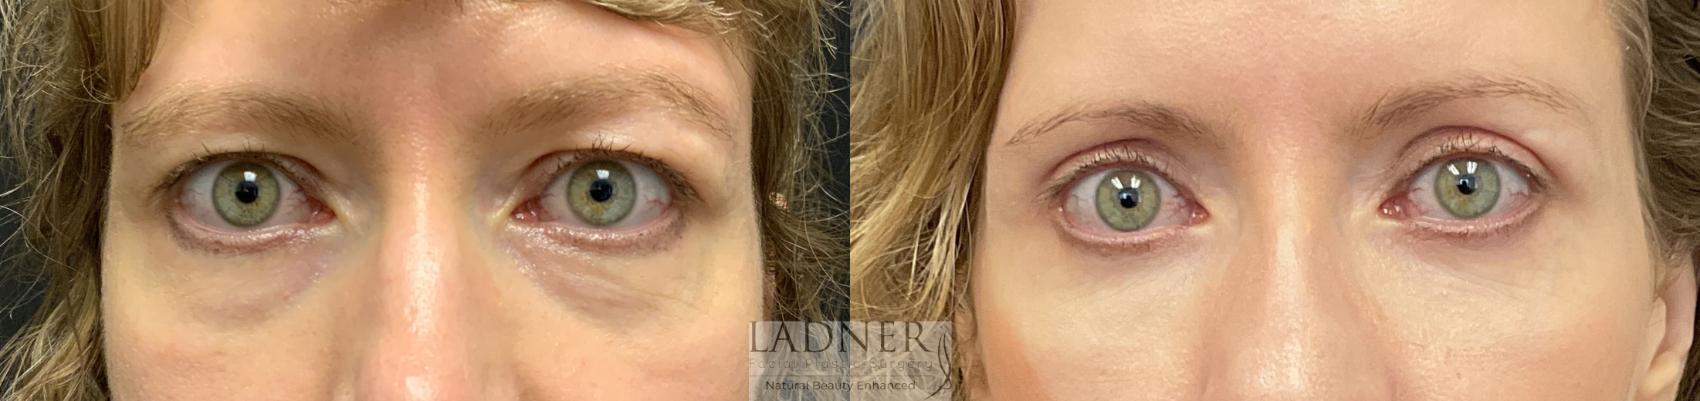 Eyelid Surgery (blepharoplasty) Case 153 Before & After Front | Denver, CO | Ladner Facial Plastic Surgery